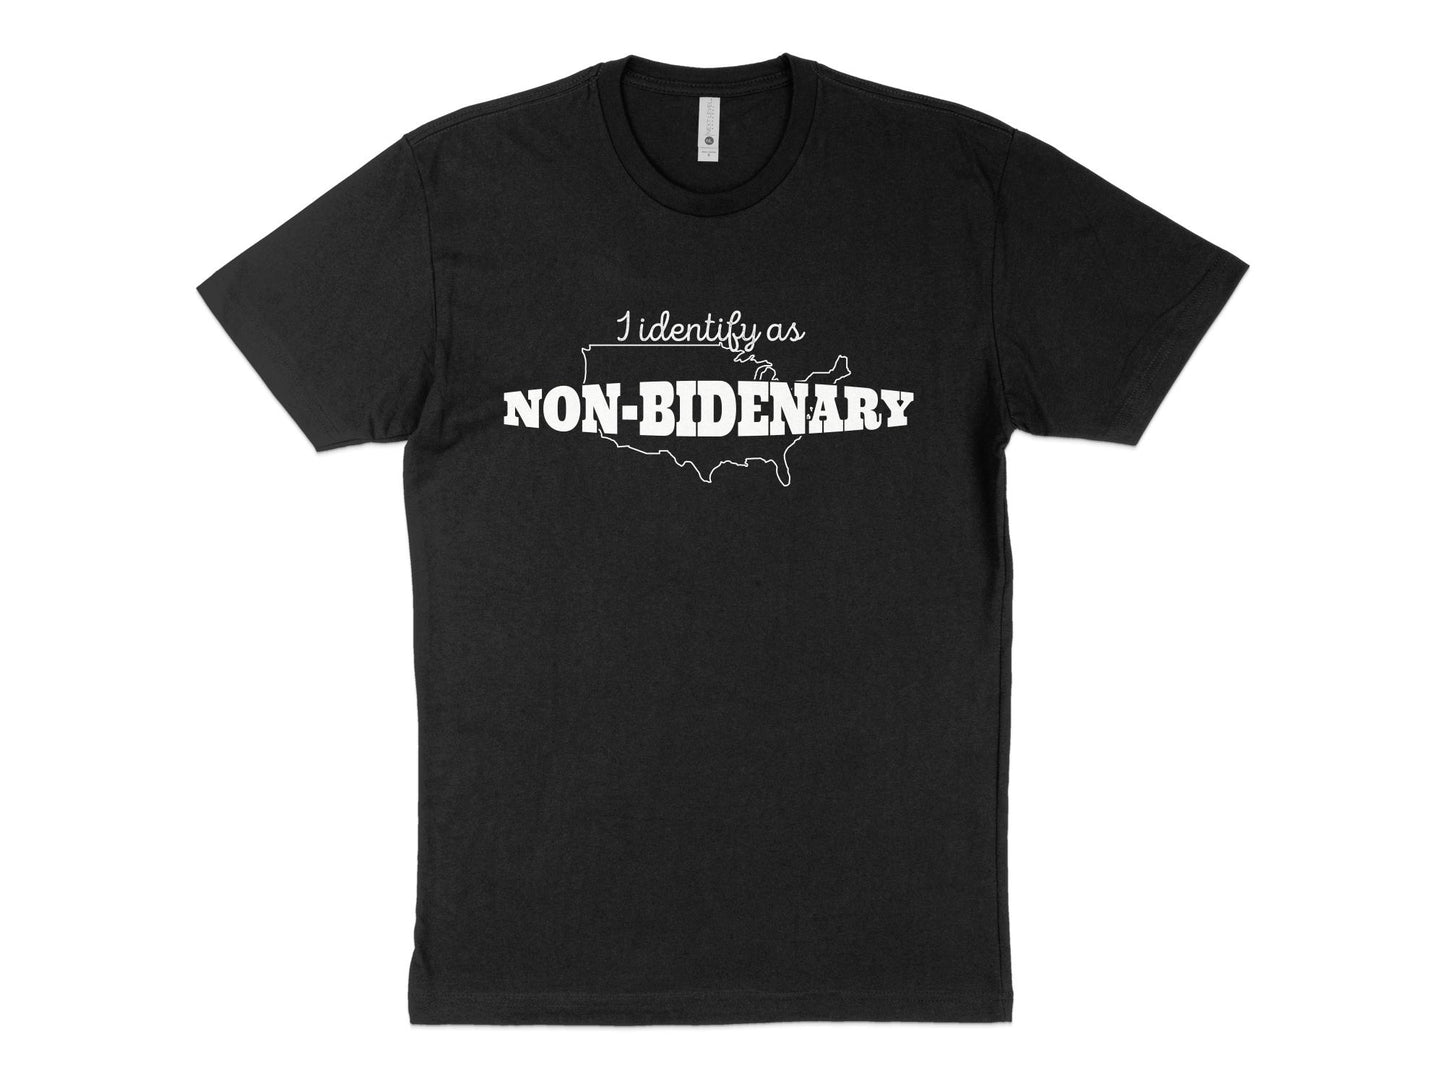 I Identify As Non Bidenary Shirt, black